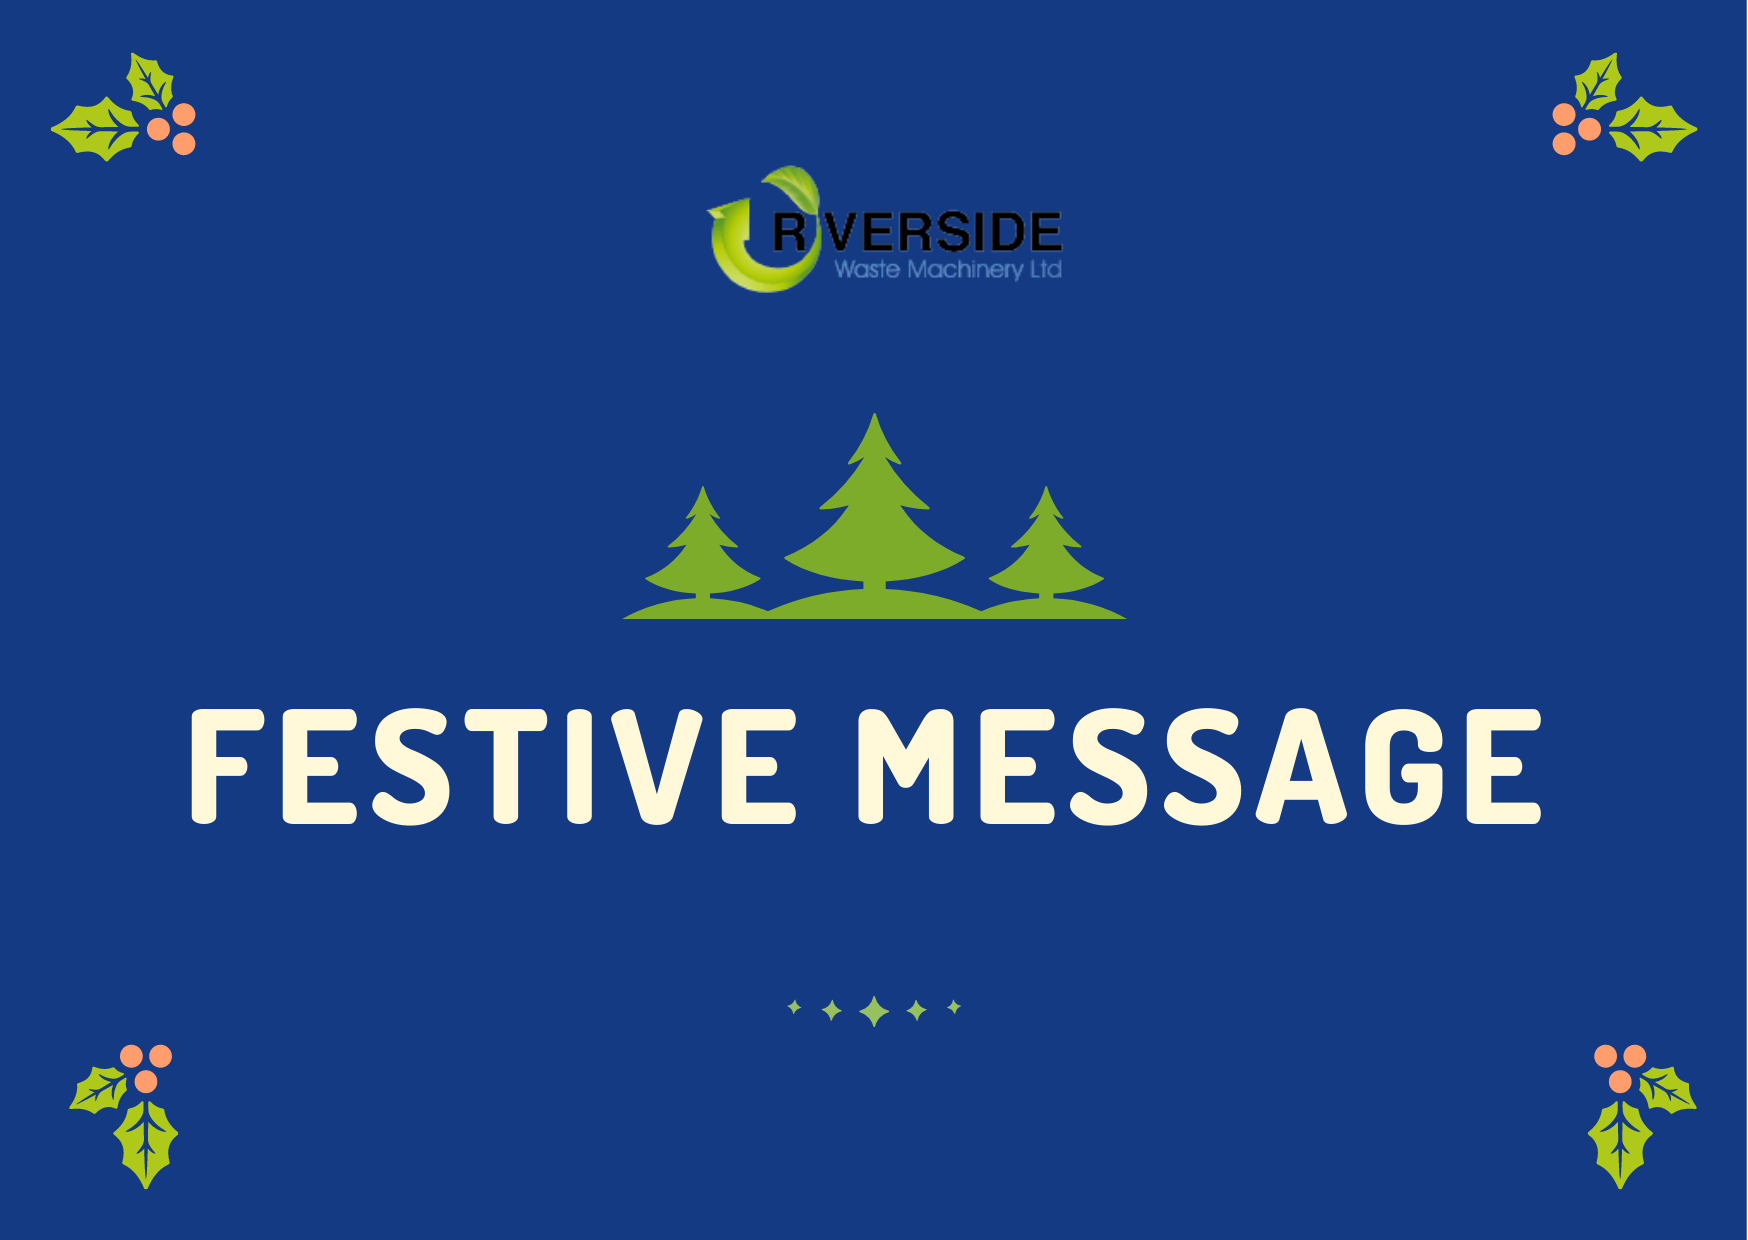 Riverside’s festive message